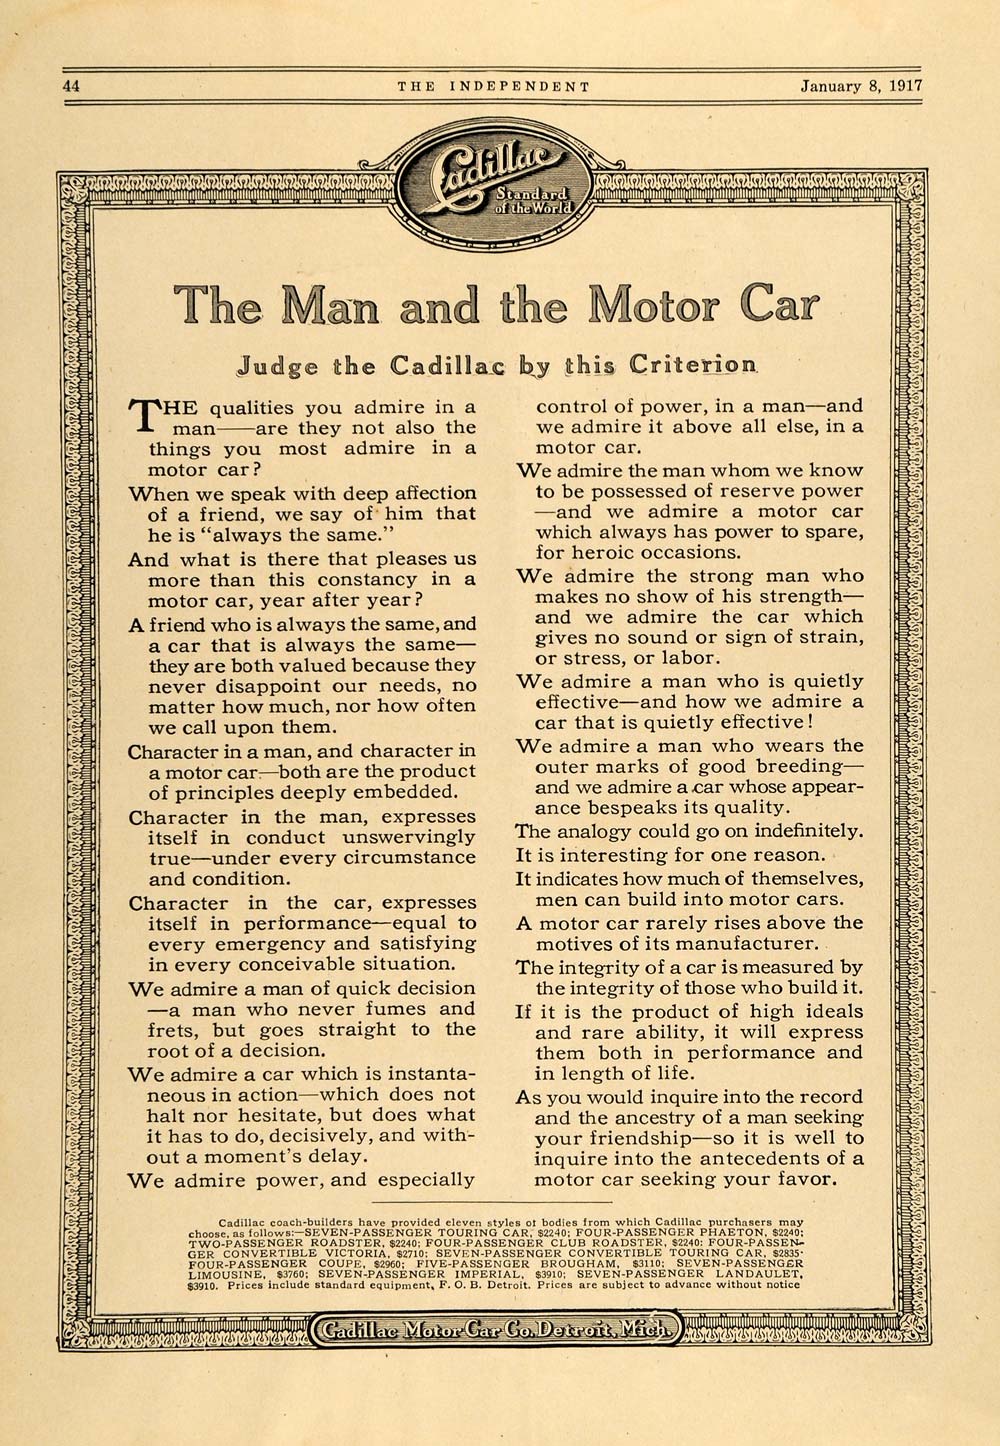 1917 Ad Cadillac Motor Car Co. Automobiles Detroit MI - ORIGINAL TIN2